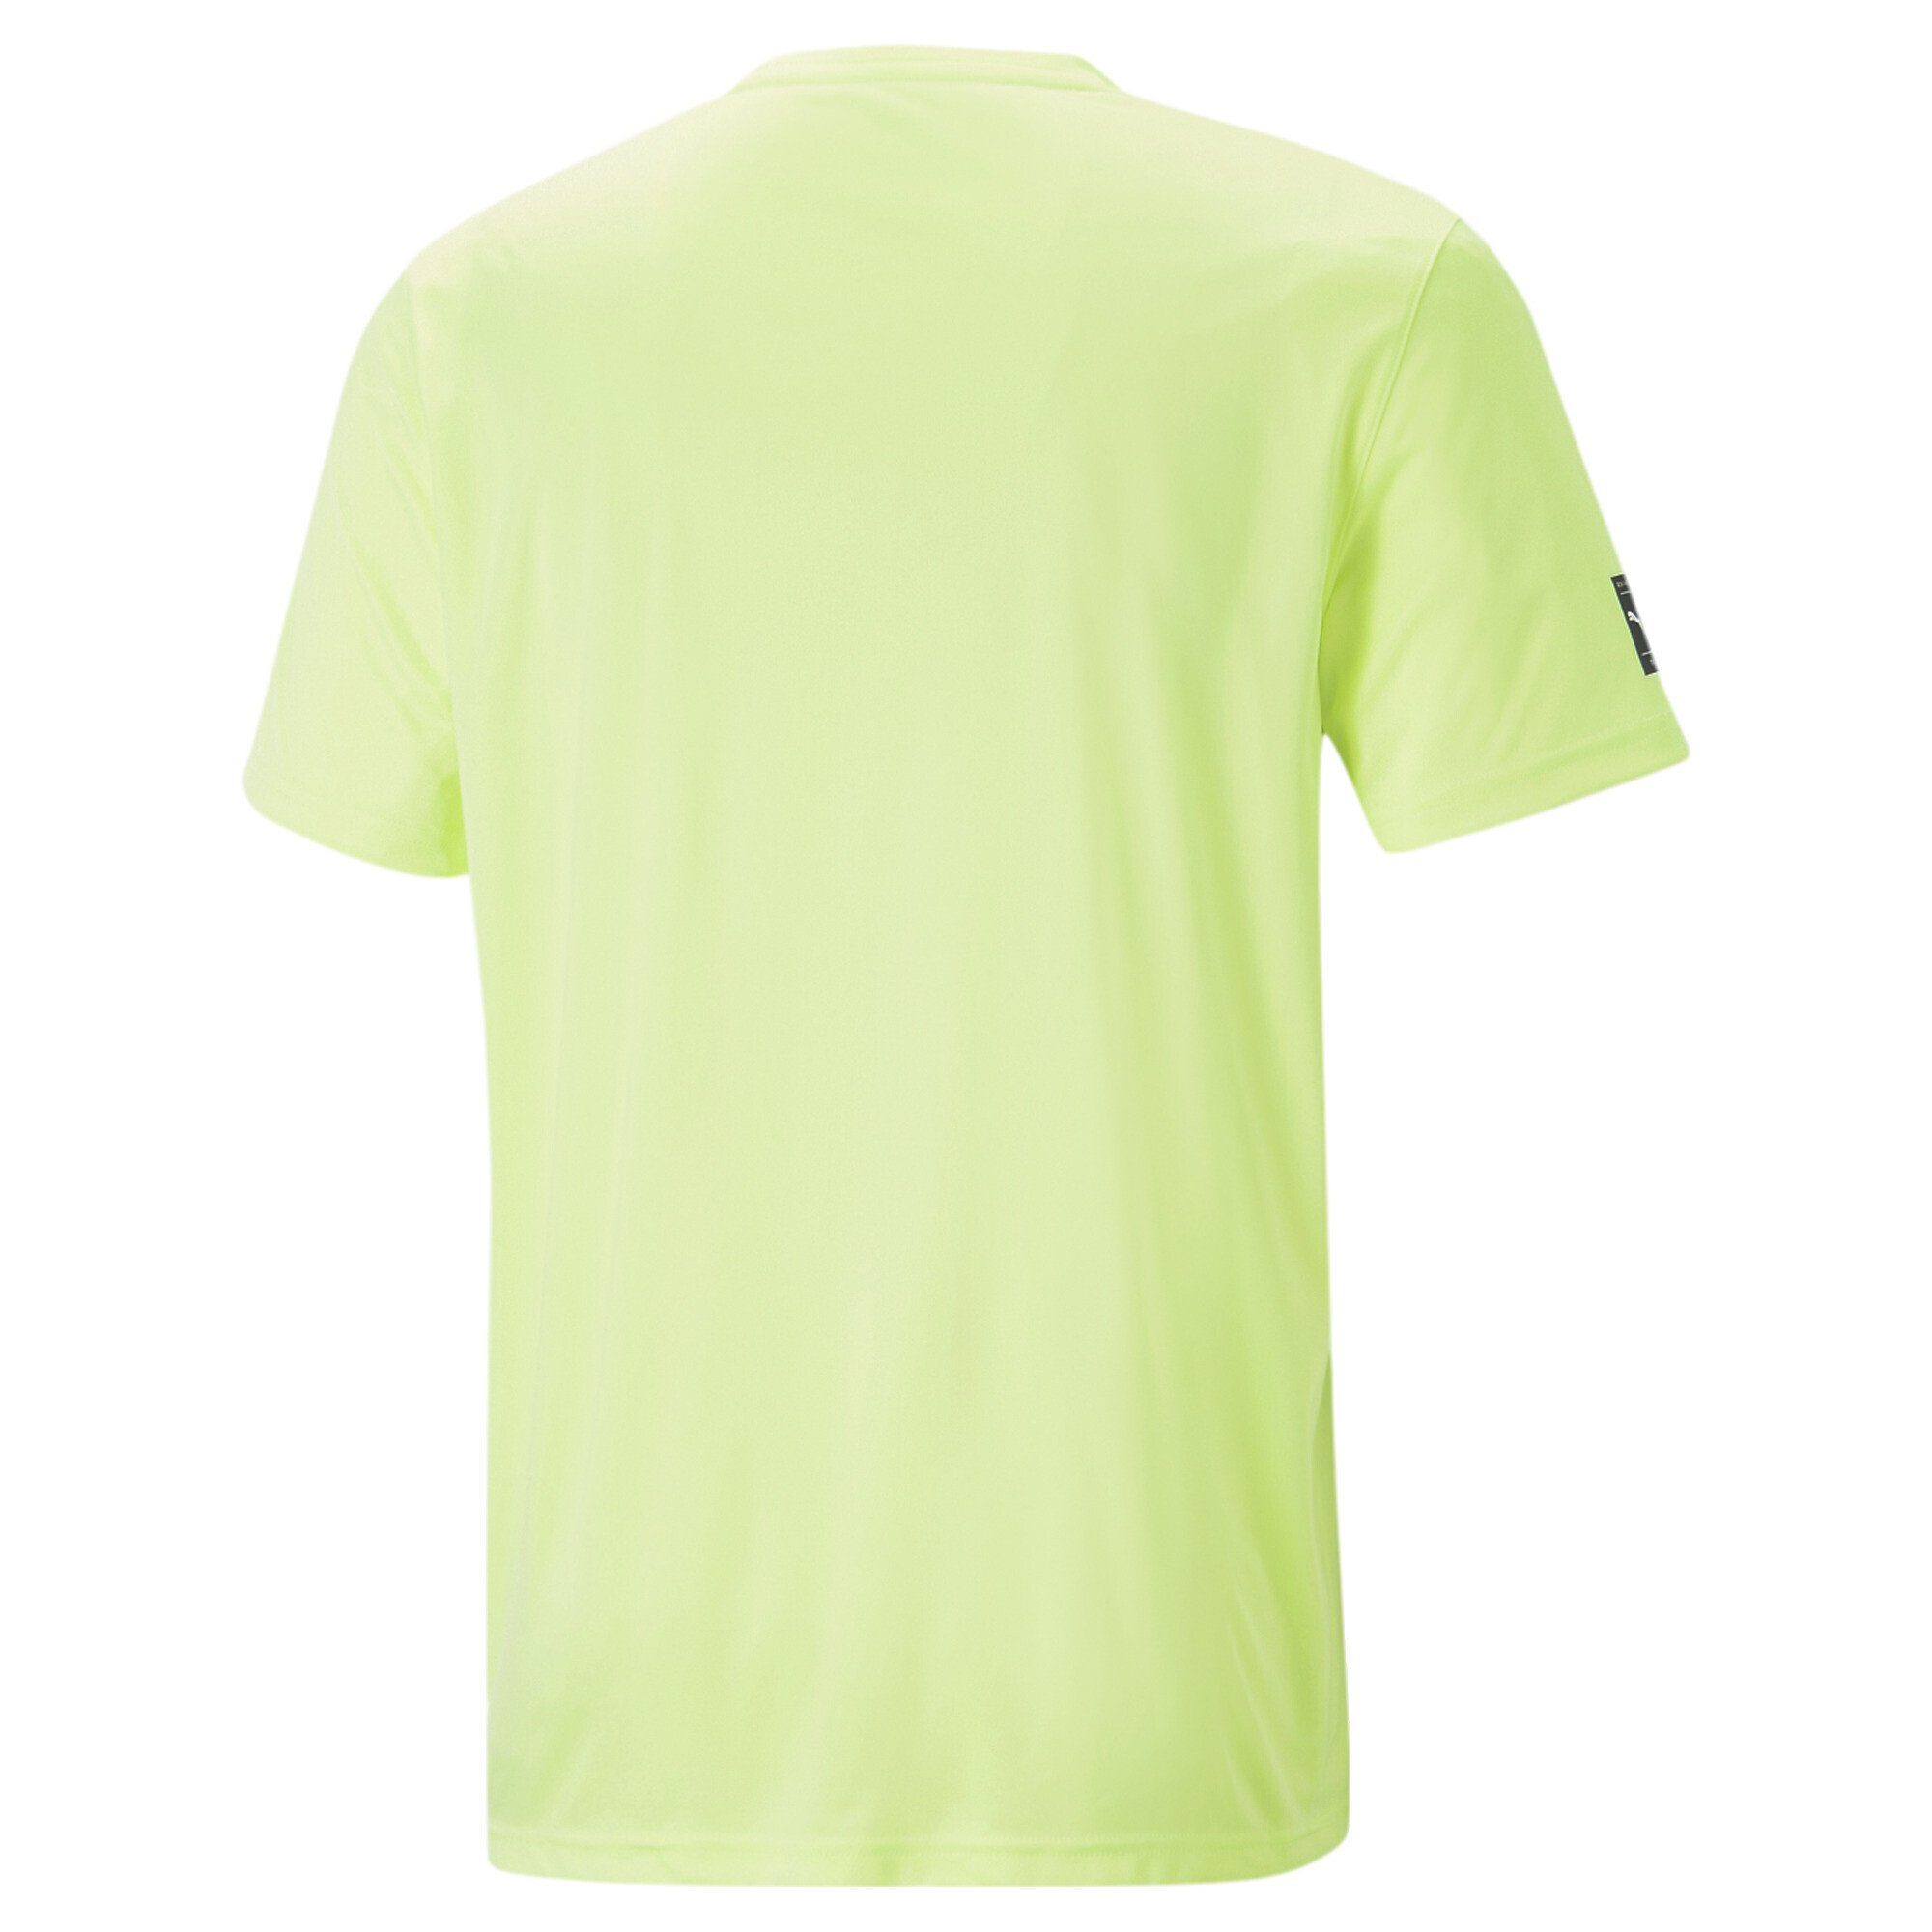 Trainings-T-Shirt PUMA PUMA Herren Trainingsshirt Fast Yellow Fit